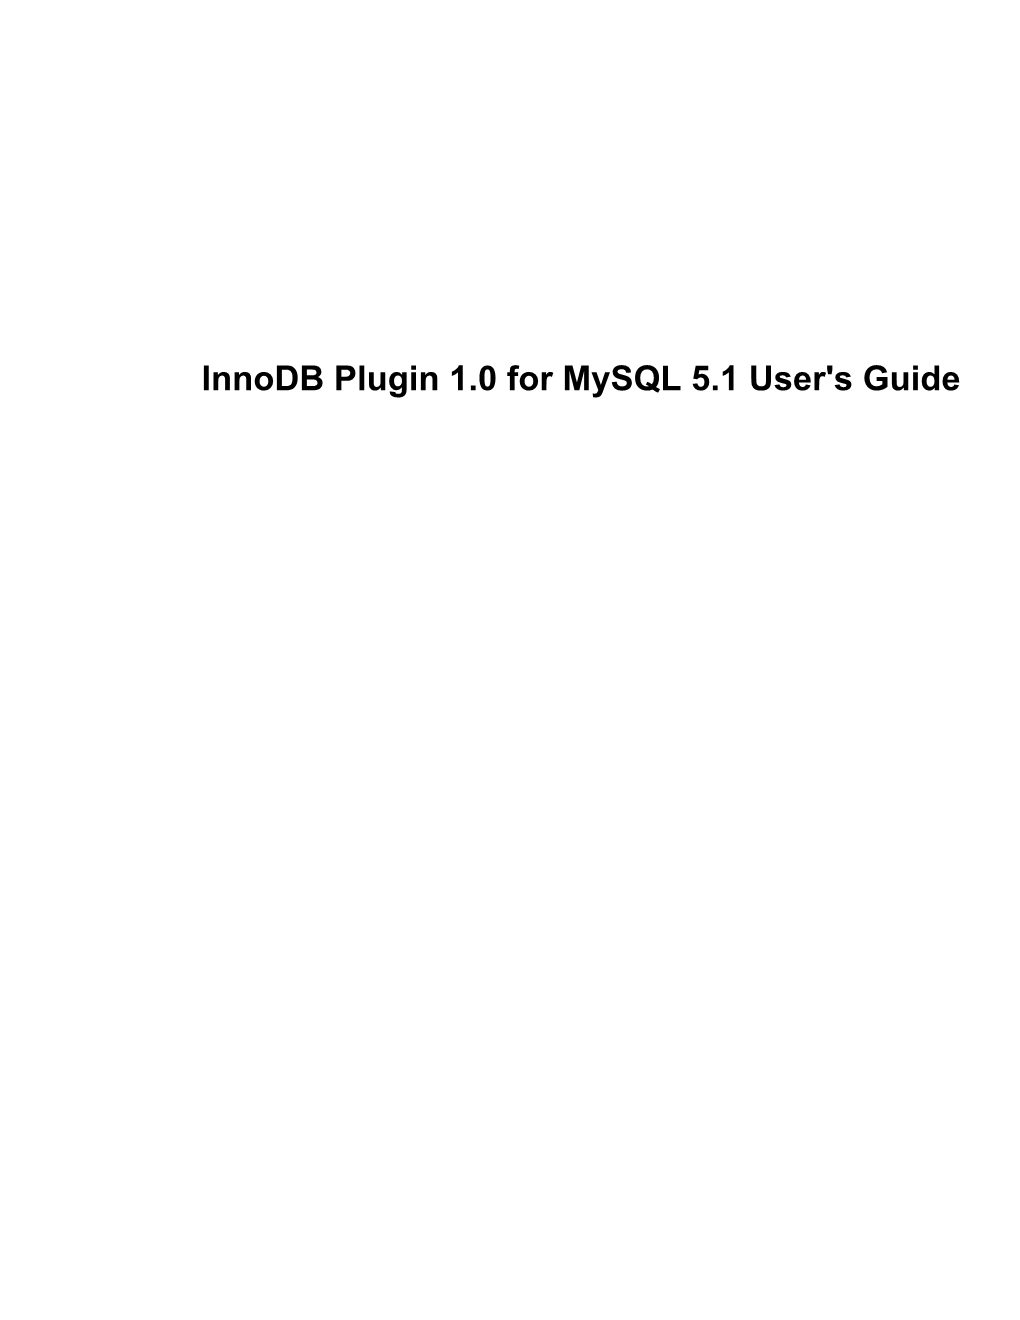 Innodb Plugin 1.0 for Mysql 5.1 User's Guide Innodb Plugin 1.0 for Mysql 5.1 User's Guide